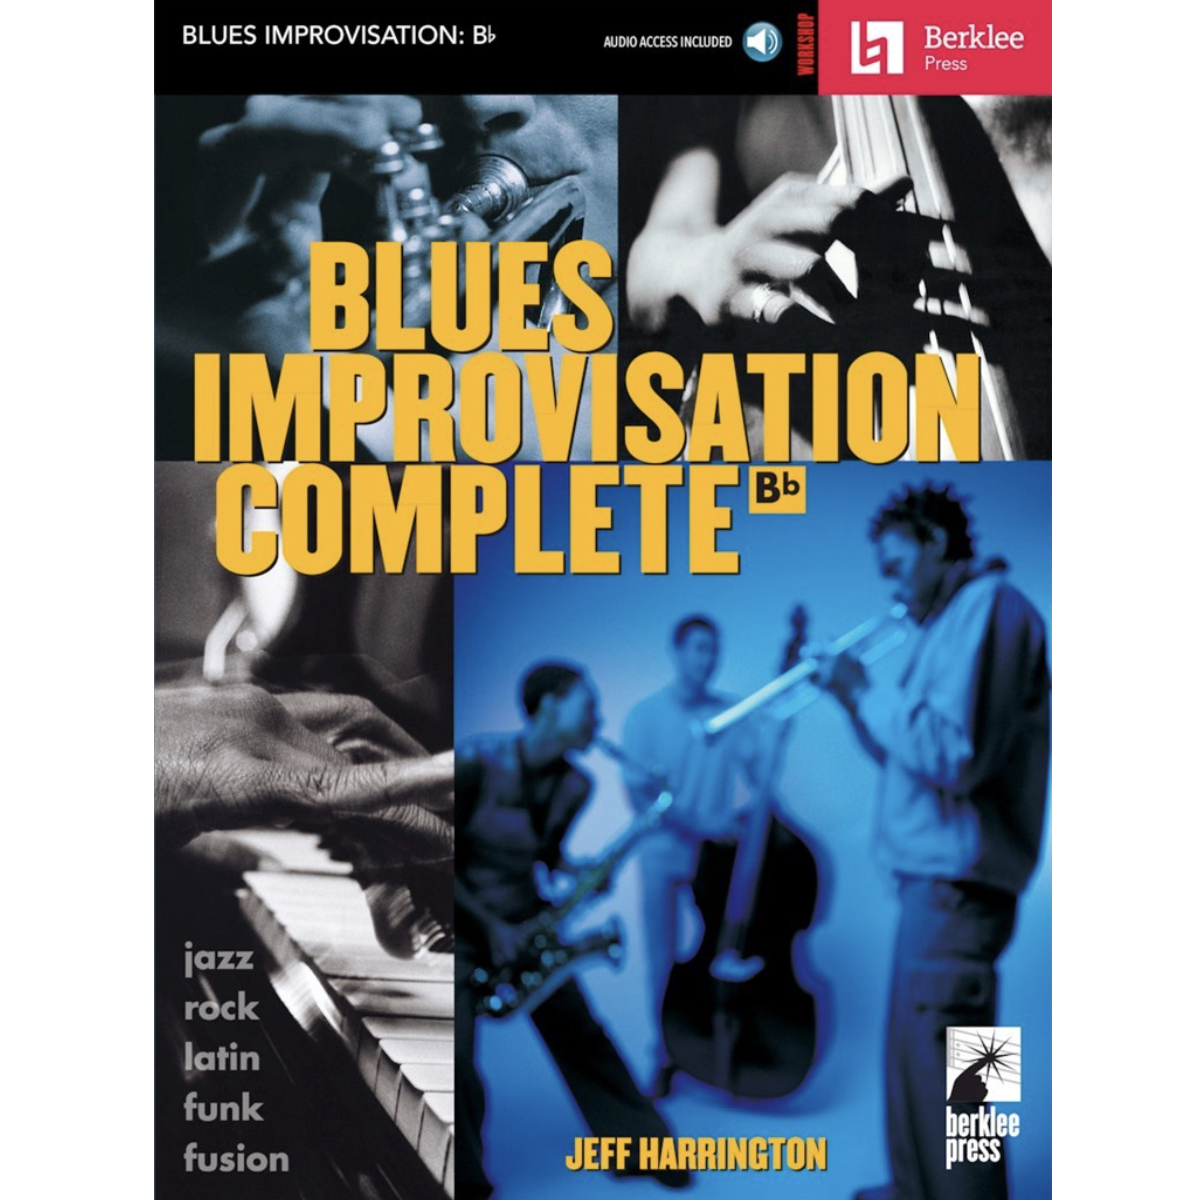 Blues Improvisation Complete Bb